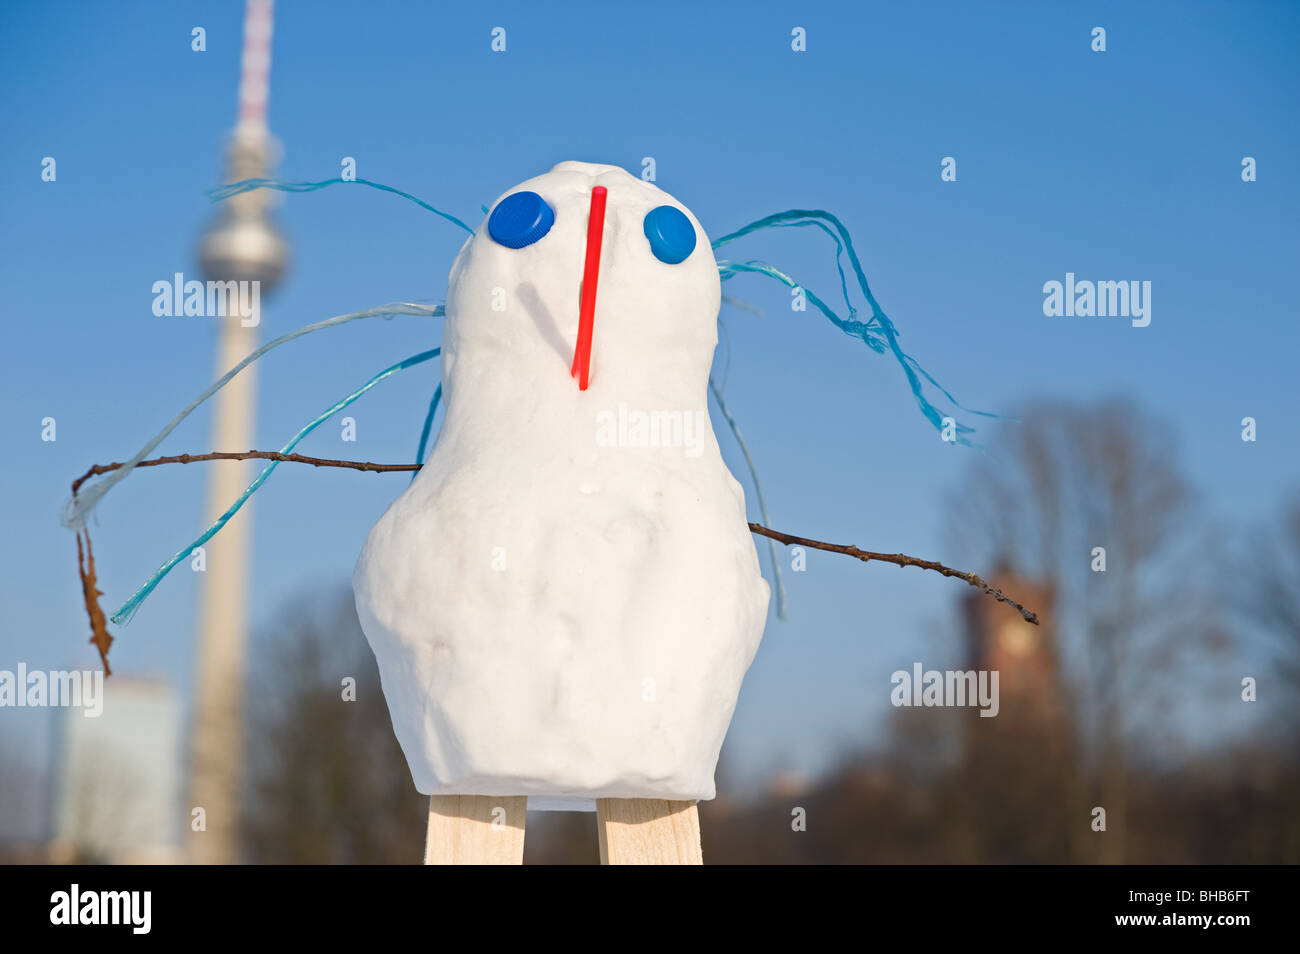 Snowman Demo 2010 on the Schlossplatz, Castle Square, Berlin, Germany, Europe Stock Photo